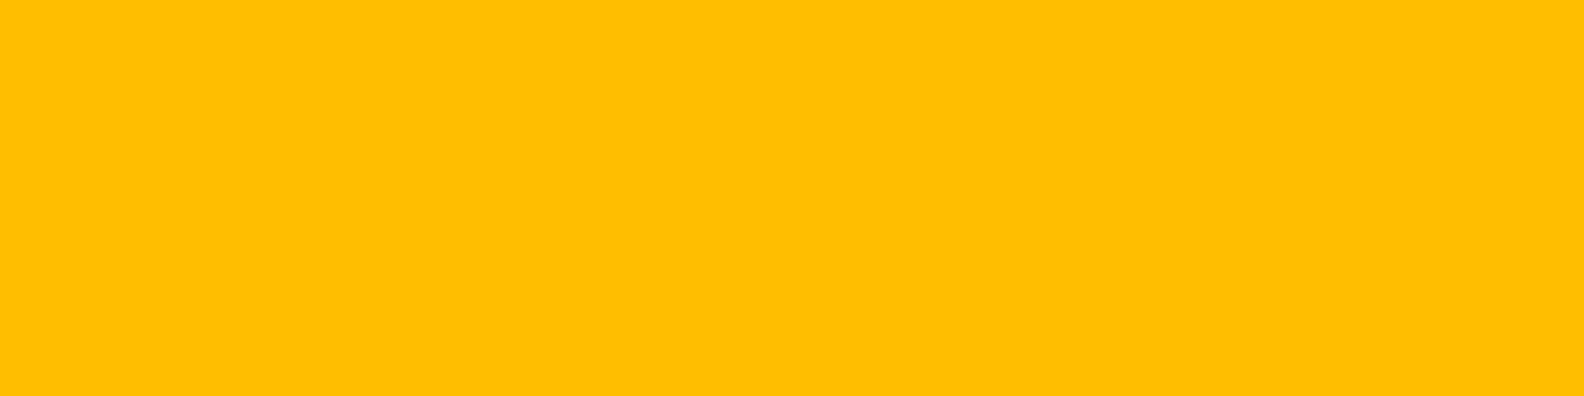 1584x396 Fluorescent Orange Solid Color Background